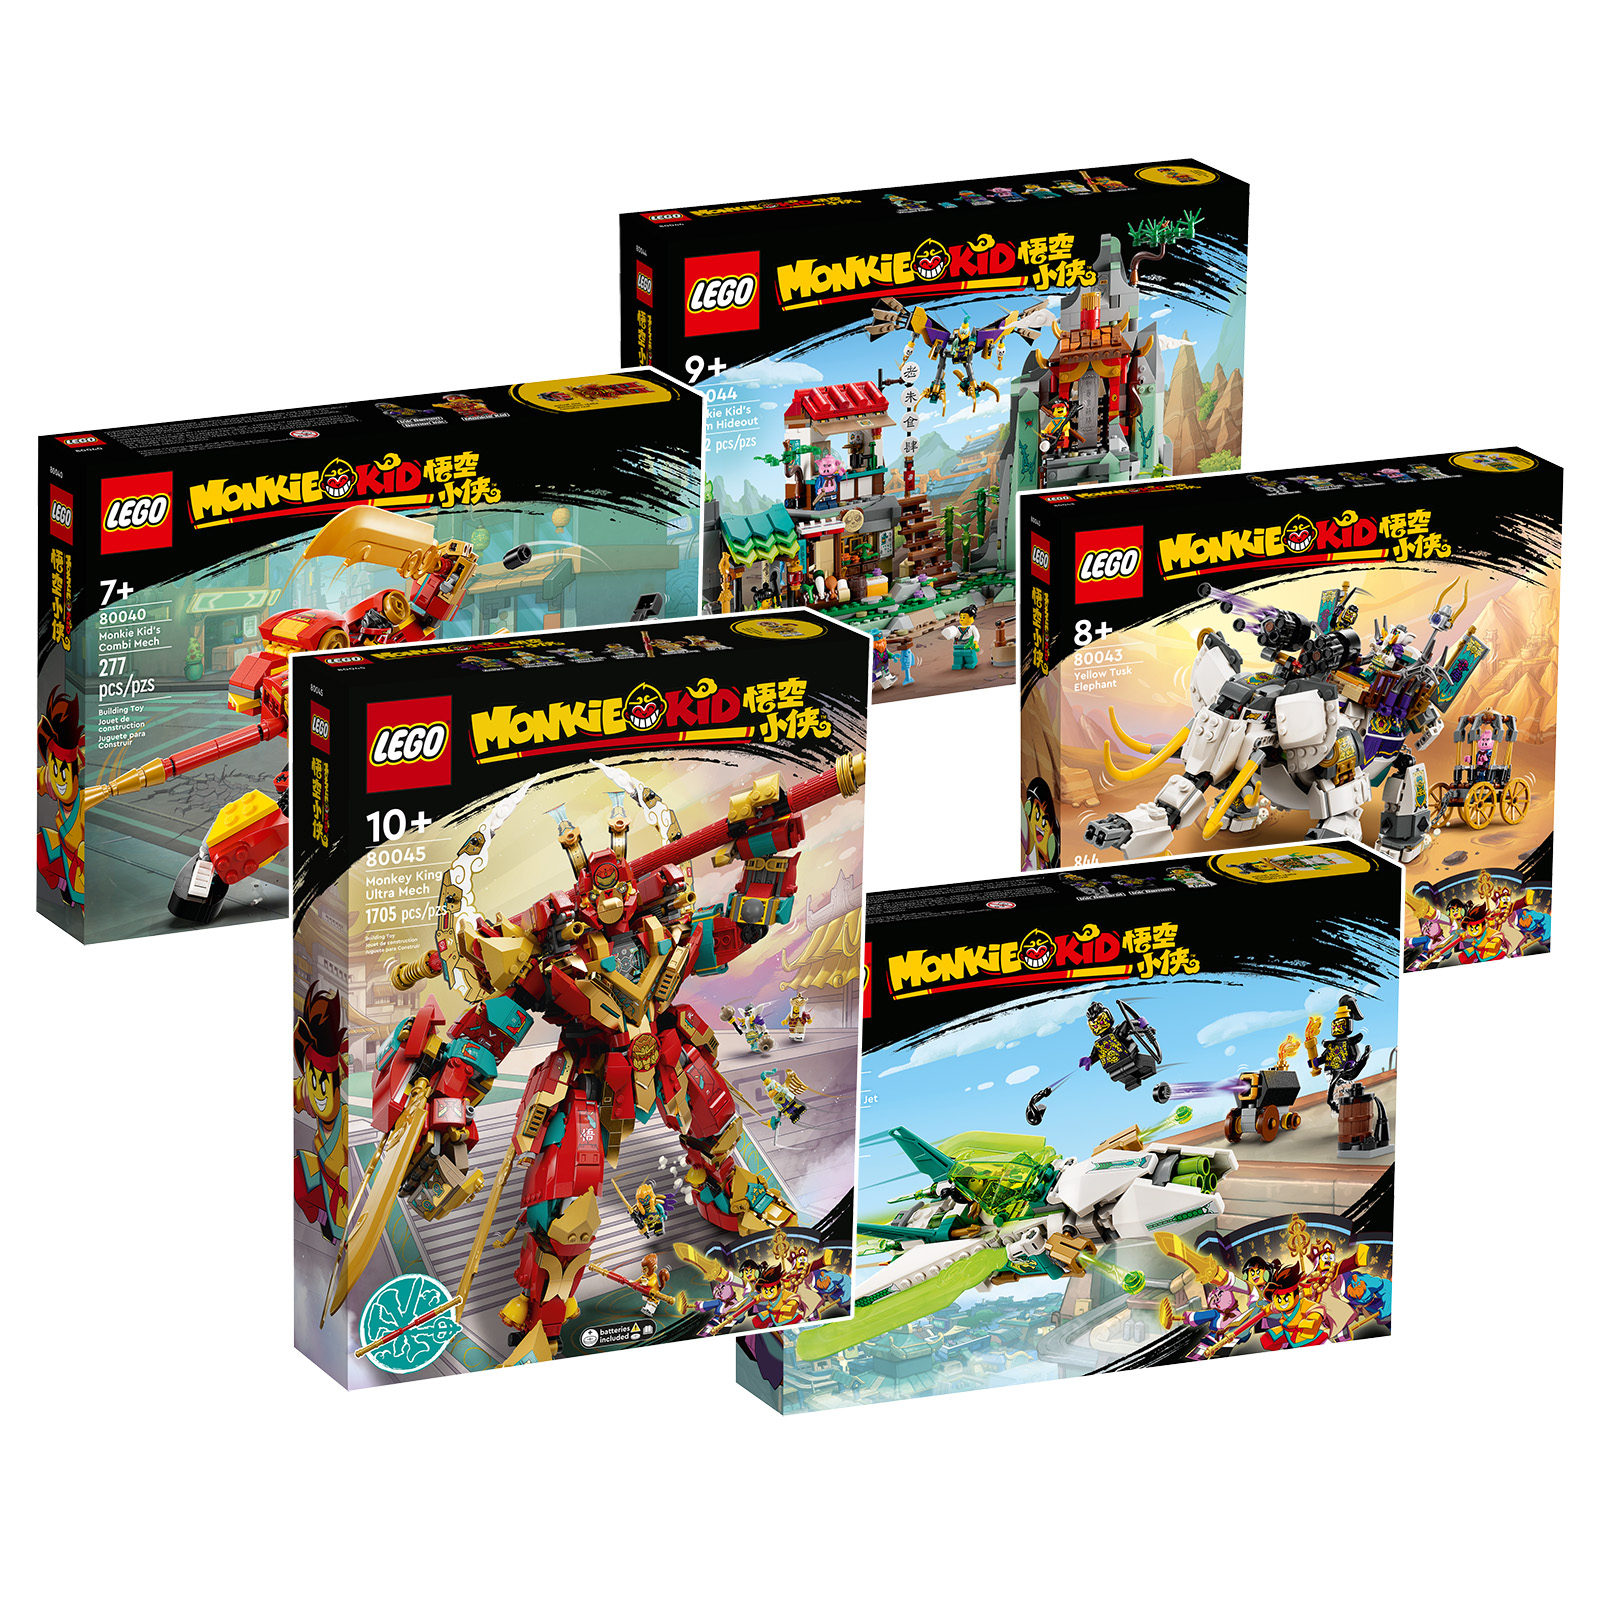 LEGO Monkie Kid جدید 2023: مجموعه ها به صورت آنلاین در فروشگاه هستند